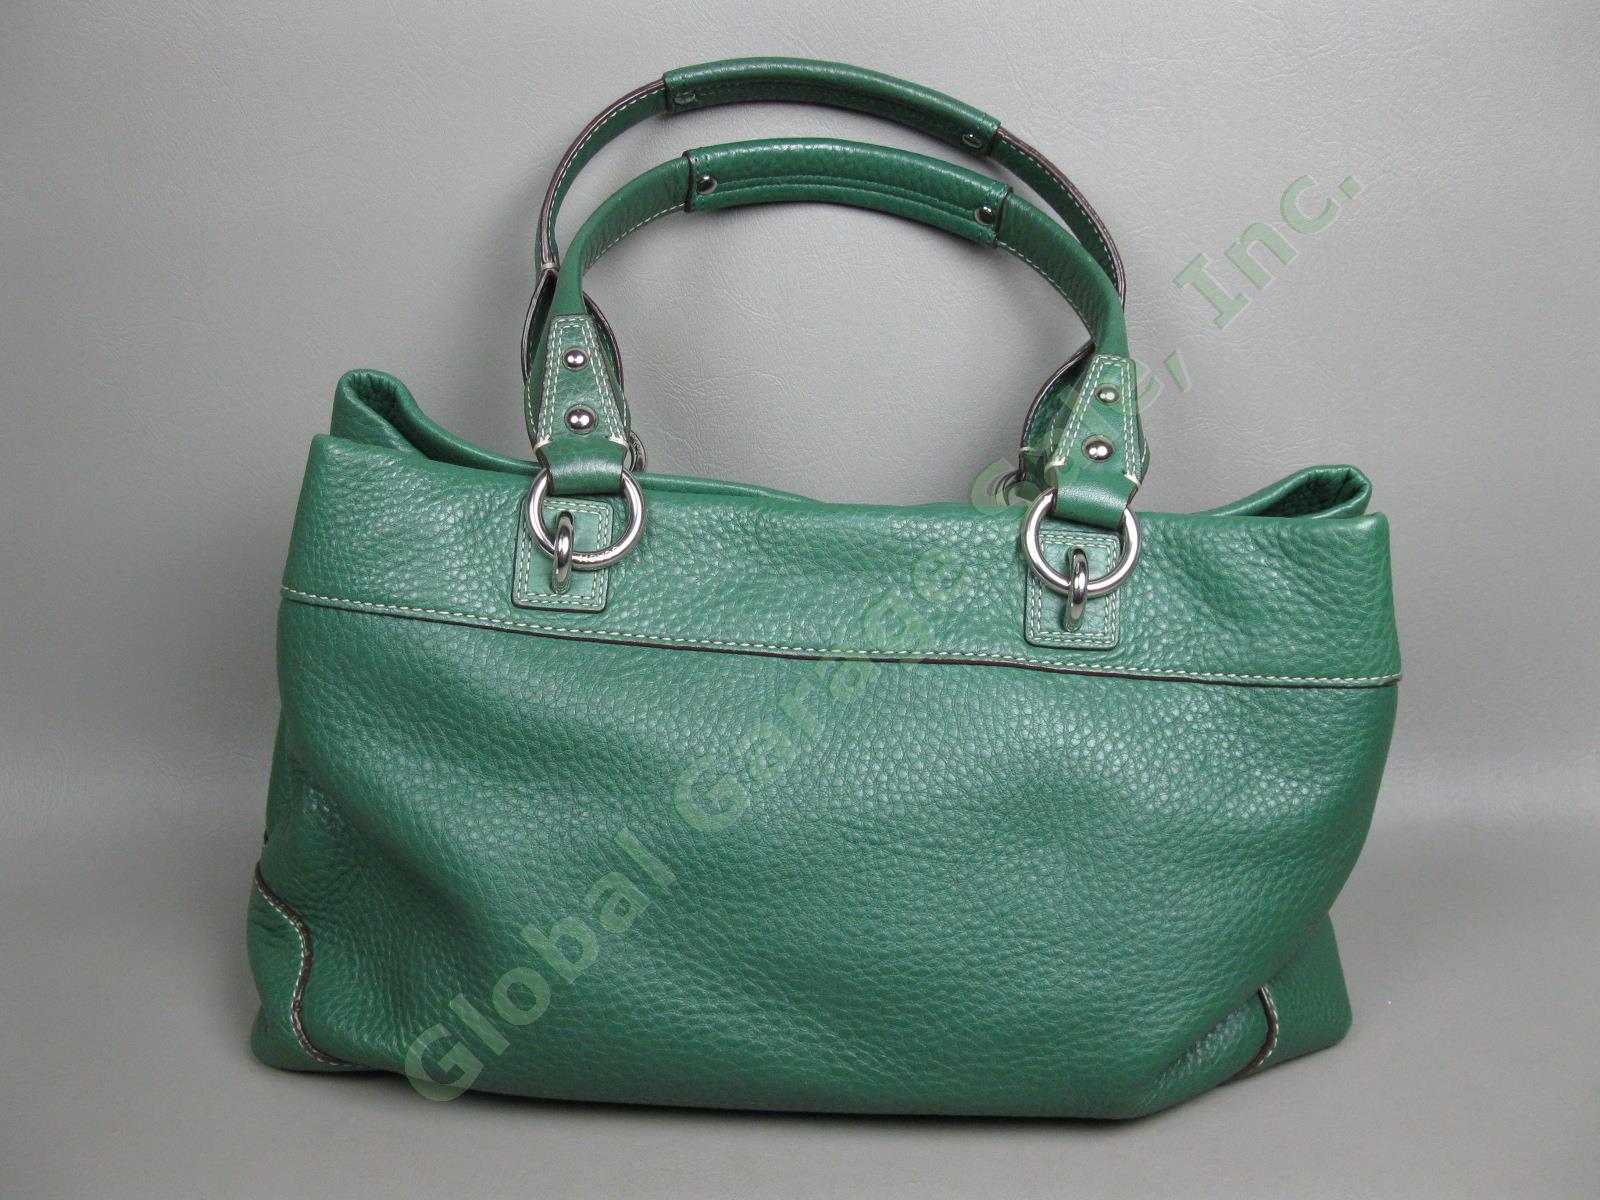 BRAND NEW Coach Designer Dark Green Pebble Leather Handbag Satchel Tote Bag NR 3